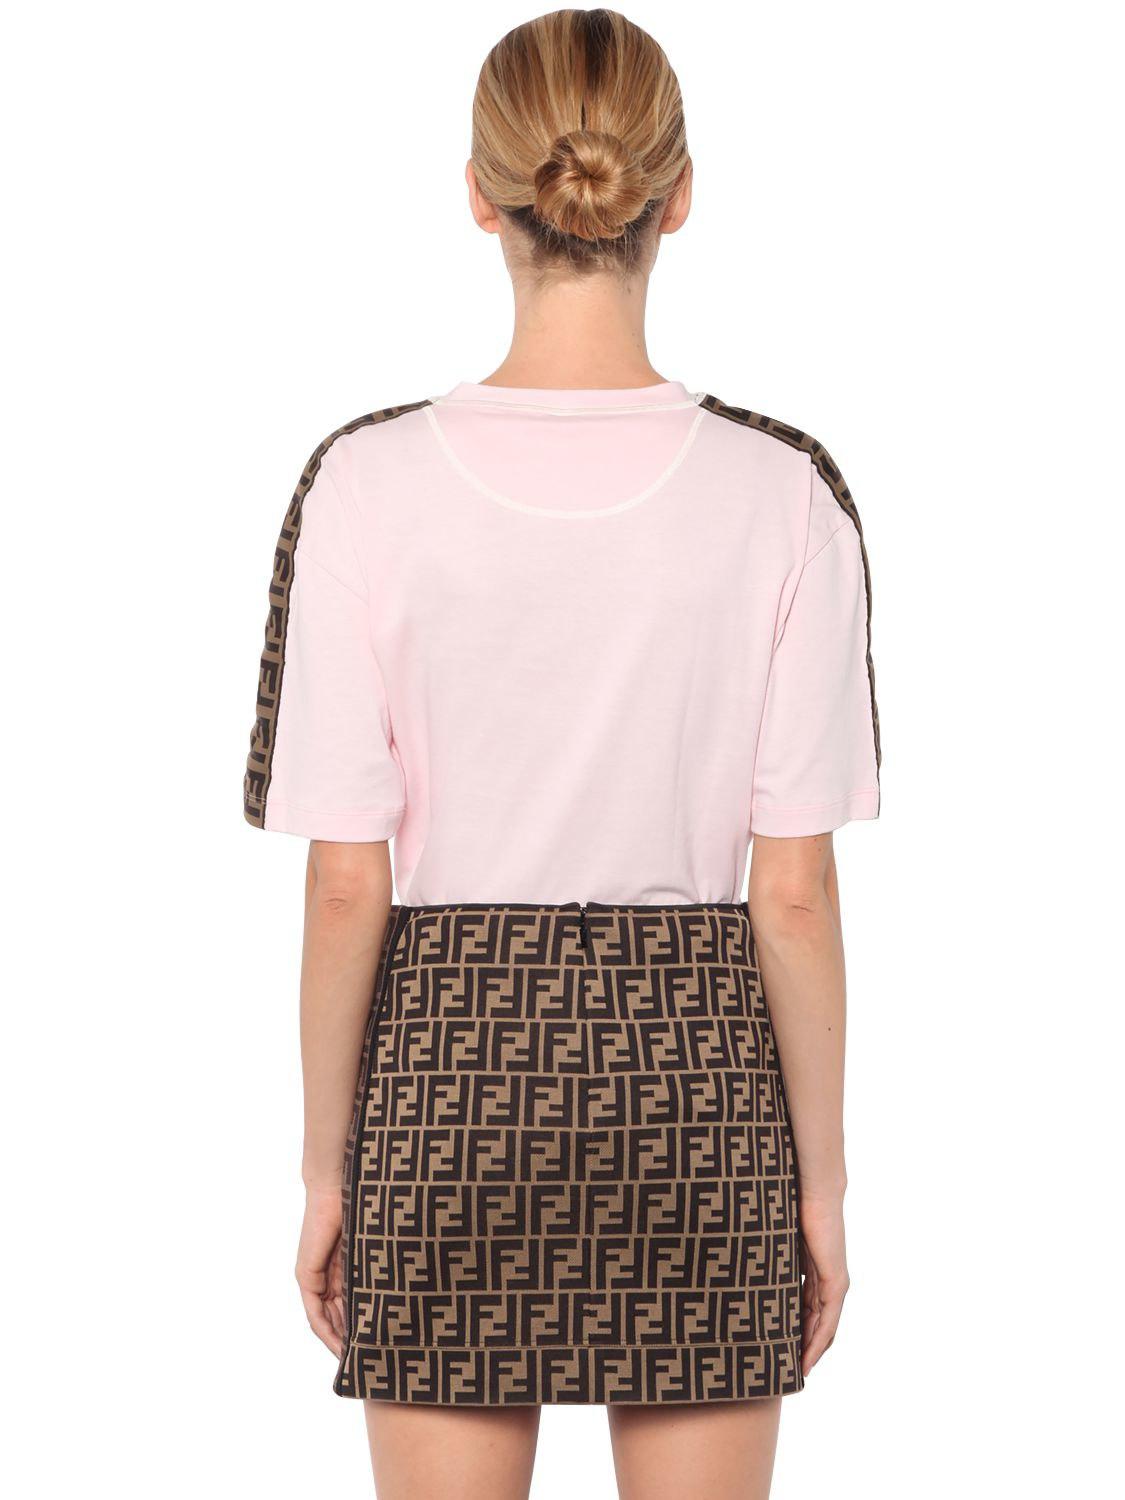 Lyst - Fendi Logo Print Cotton Jersey T-shirt in Pink